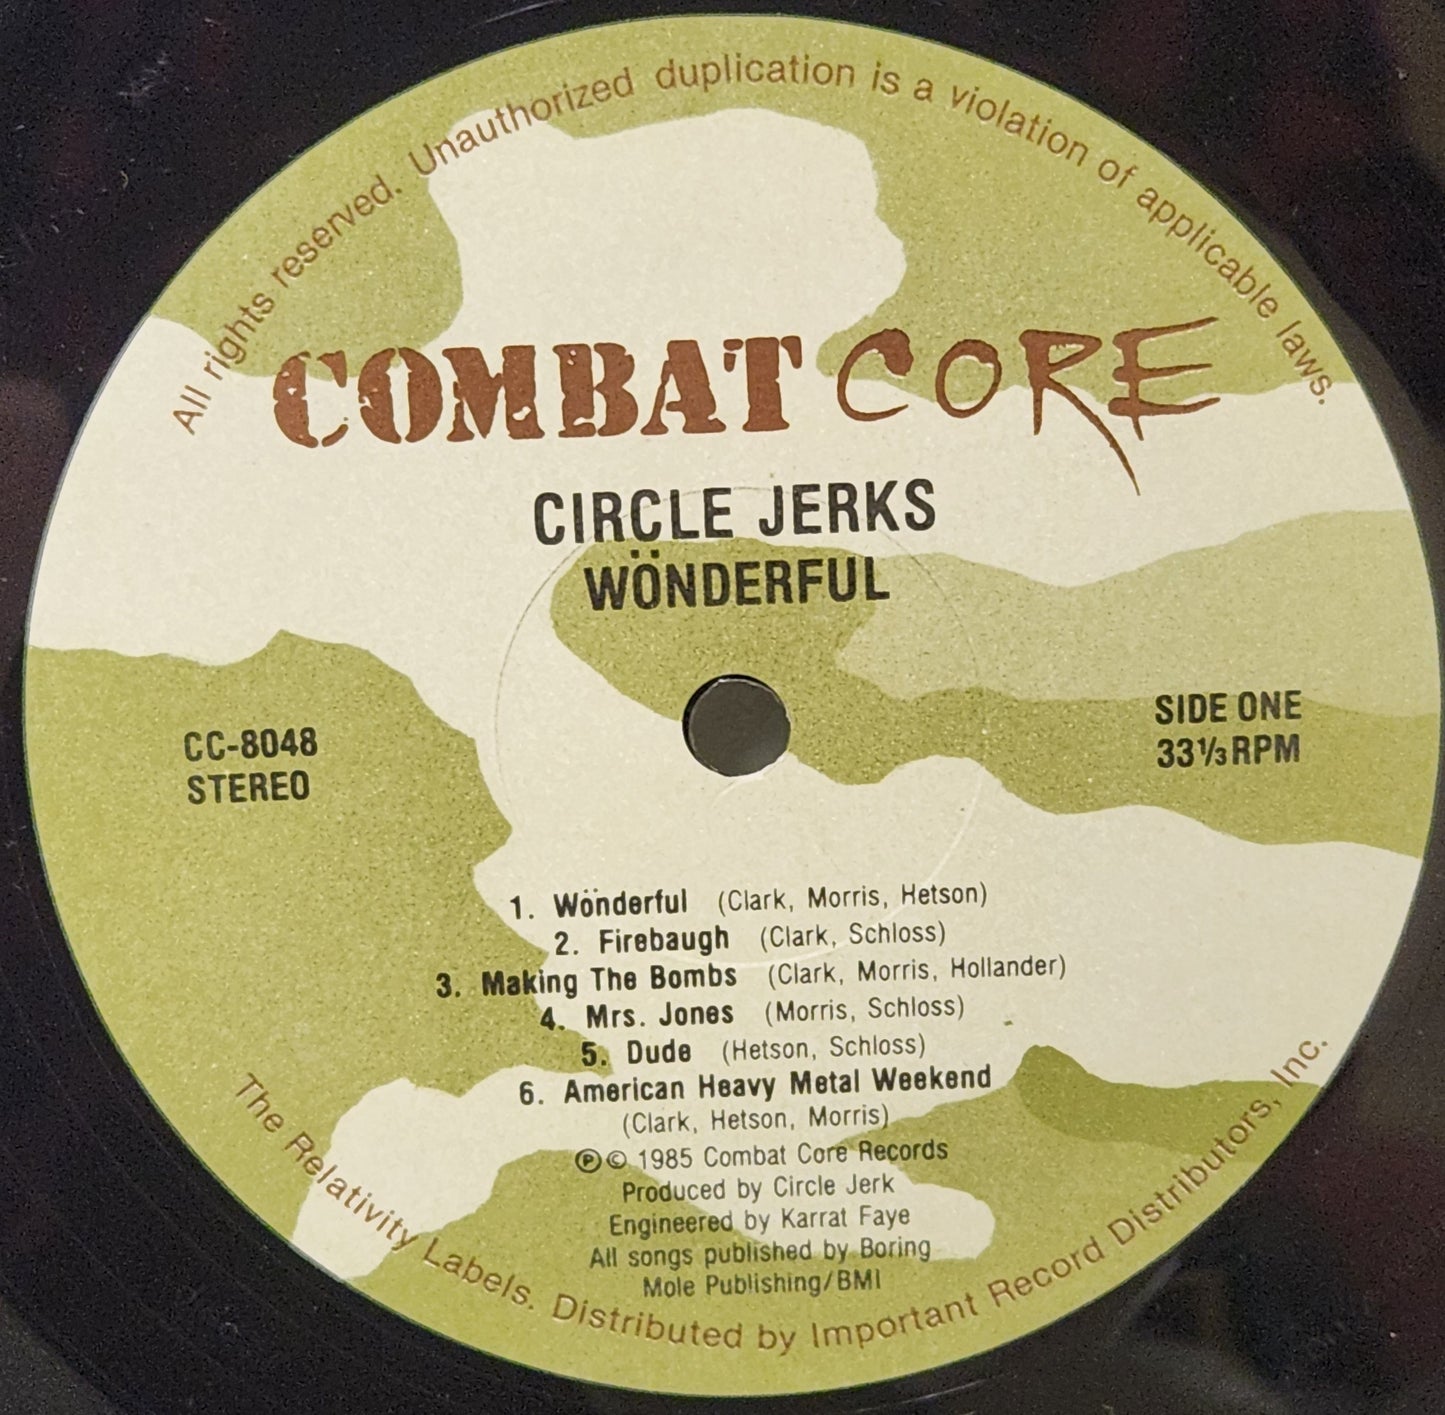 Circle Jerks "Wonderful" 1985 Punk Rock Record Album